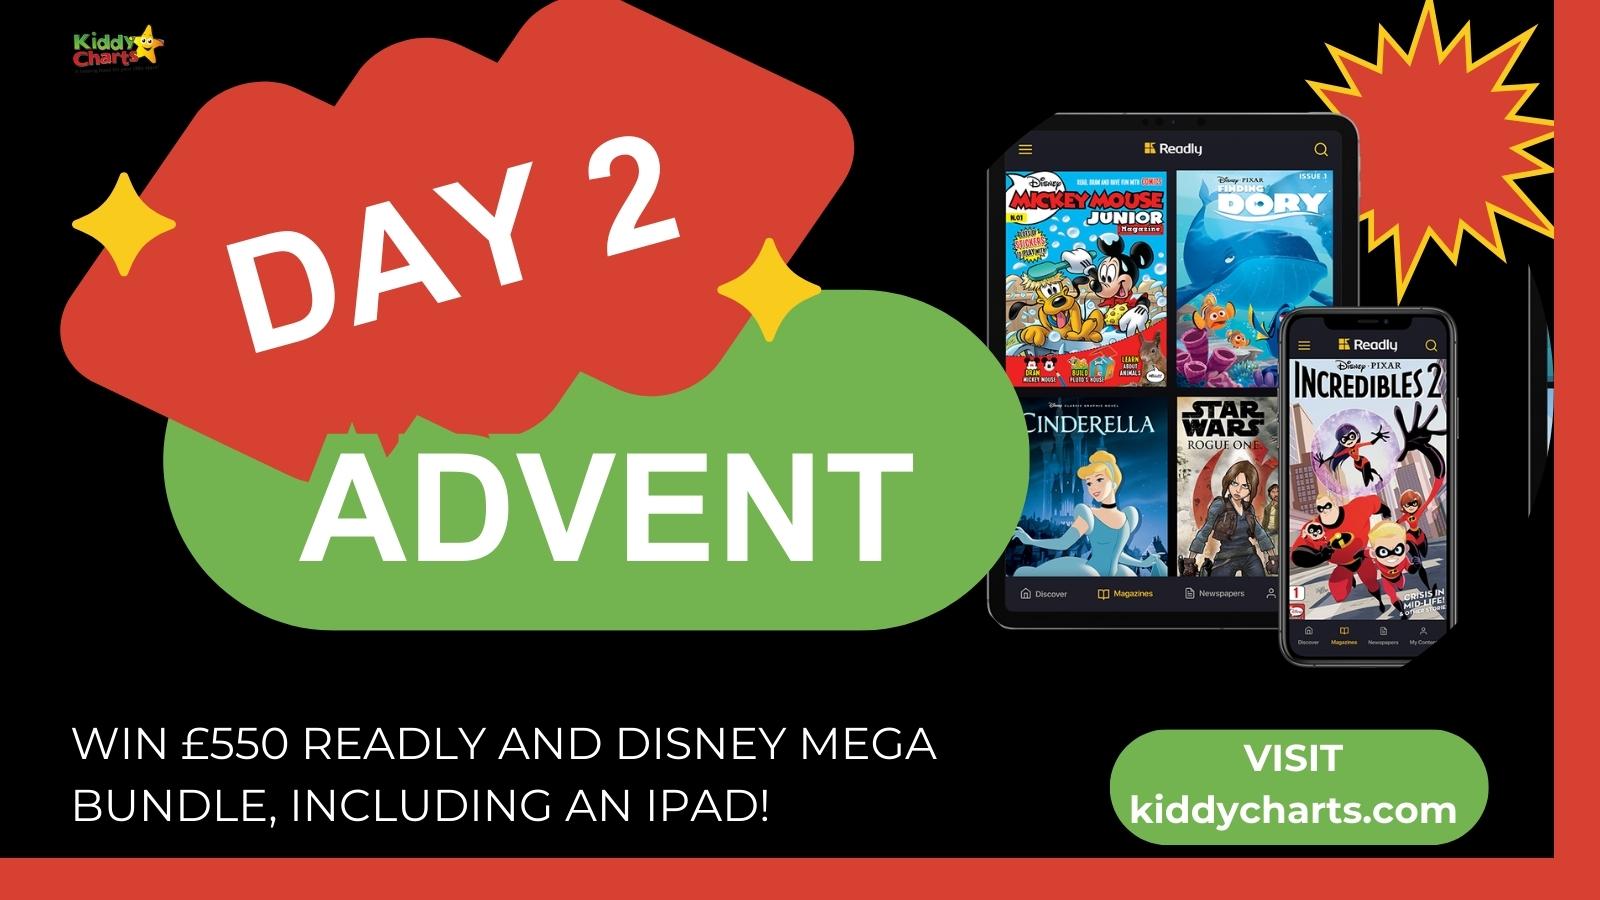 Day 2: Win £550 Readly mega bundle (iPad, Readly subscription, and £50 Disney voucher) #KiddyChartsAdvent